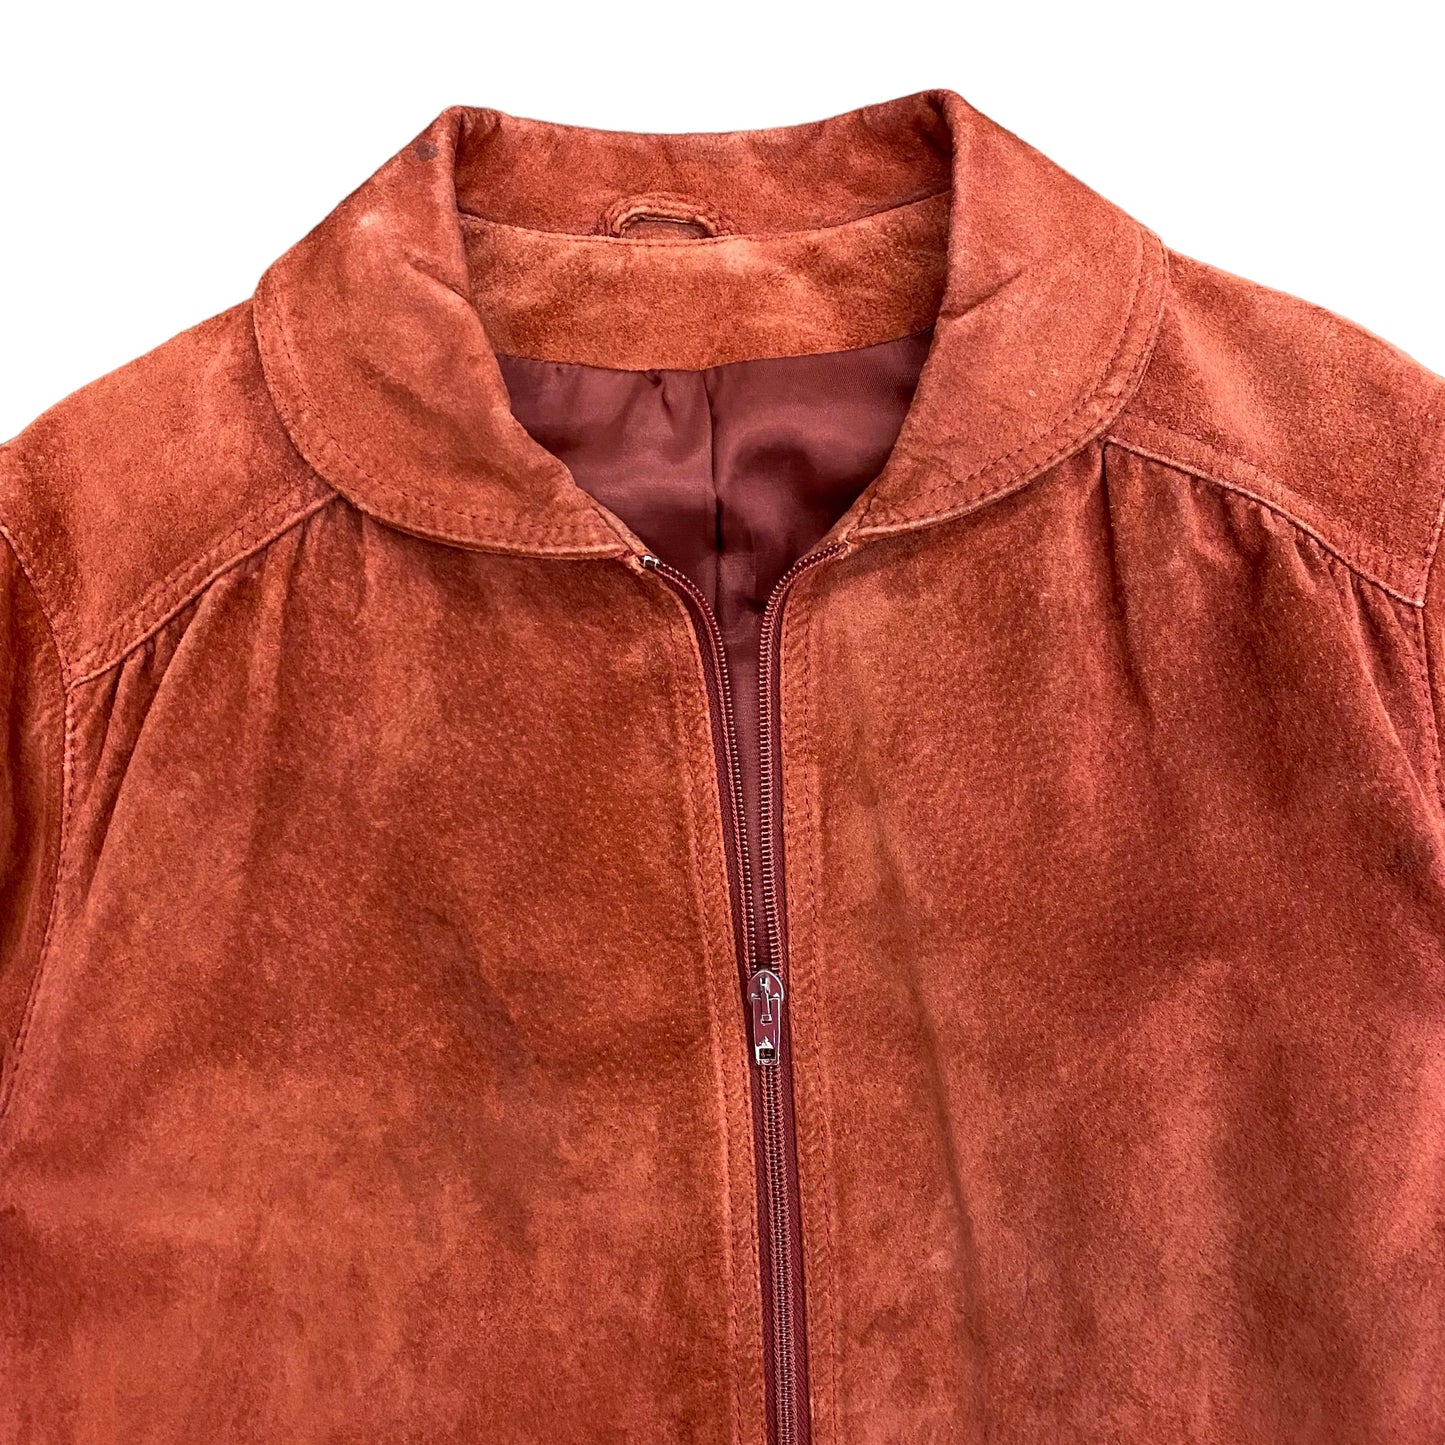 Vintage Red Suede Peter Pan Collar Jacket - Size Medium